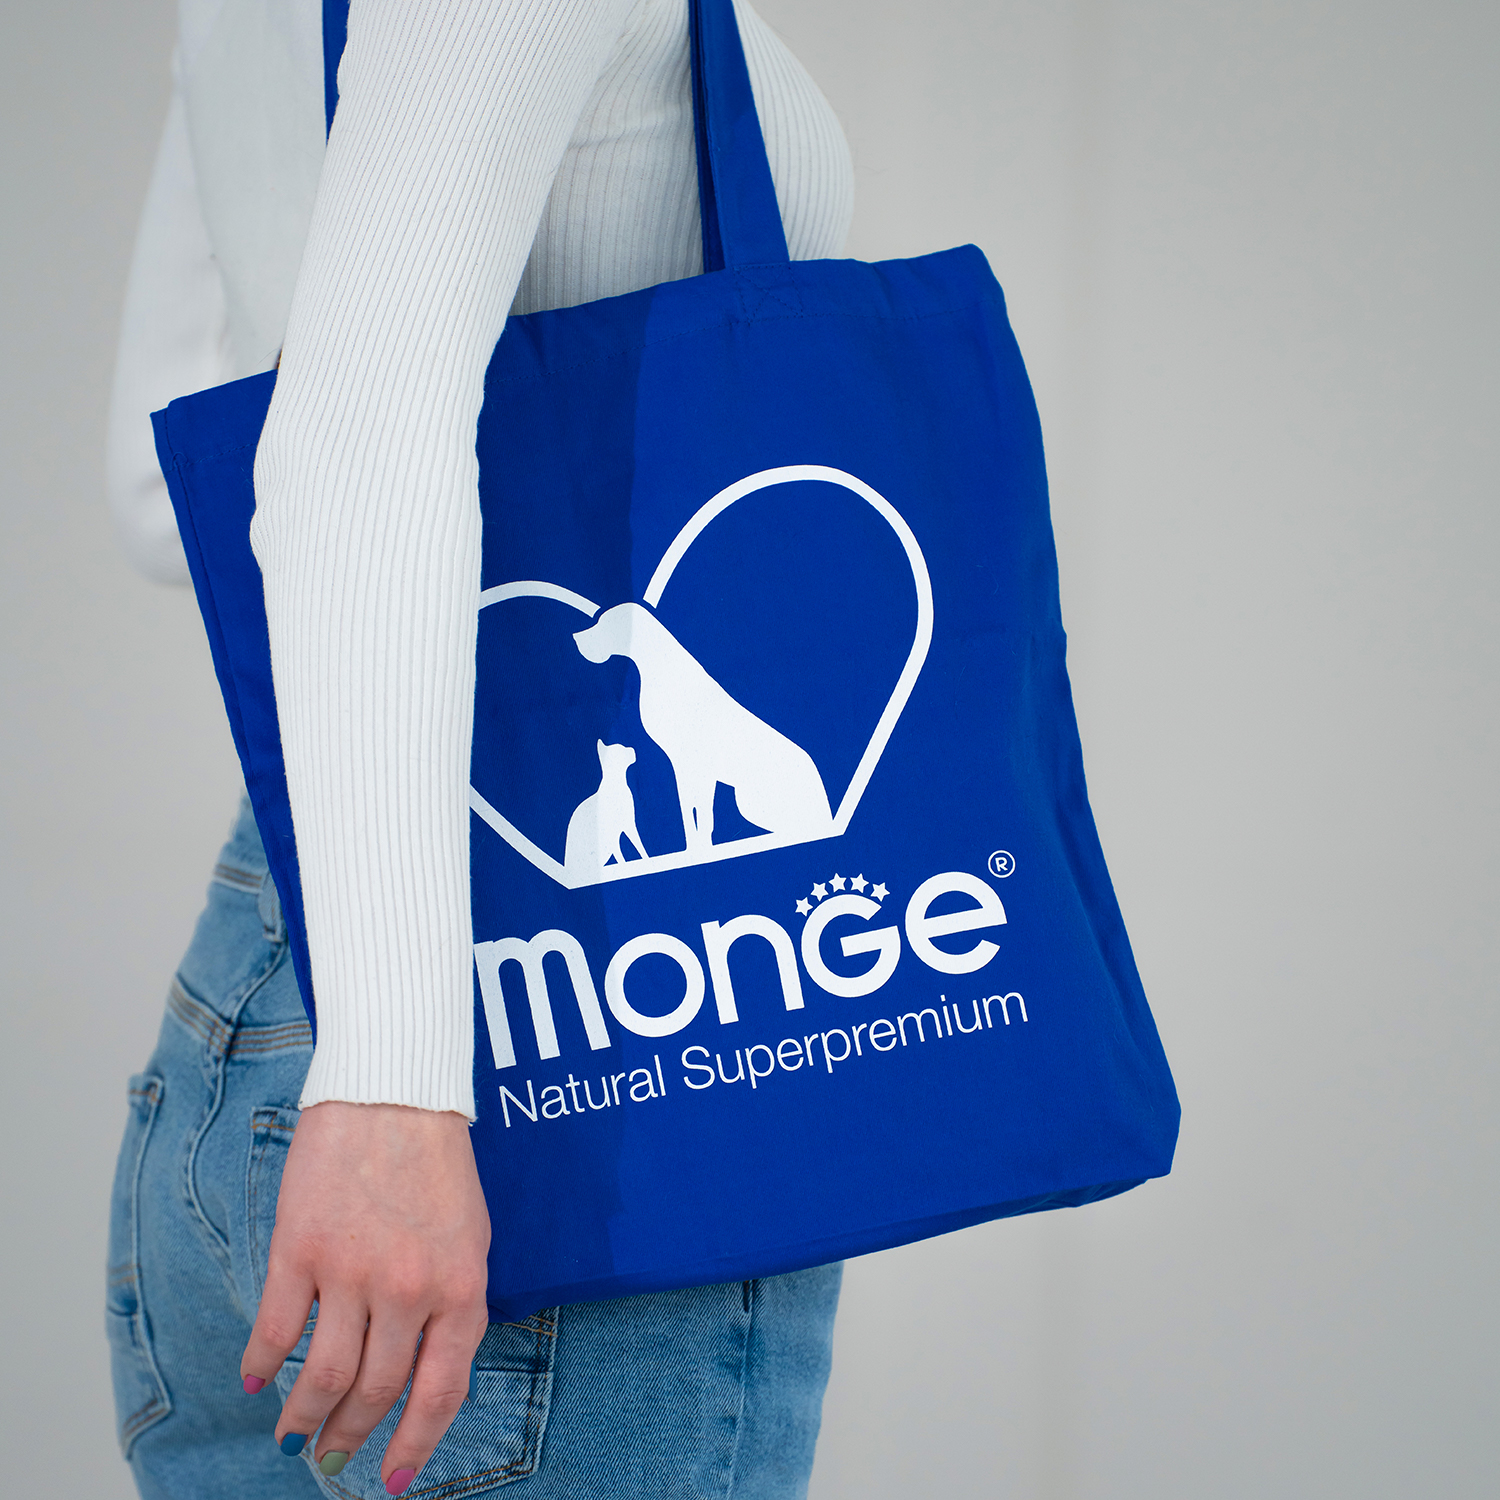 Monge Gift Shop сумка шоппер синяя премиум коллекция